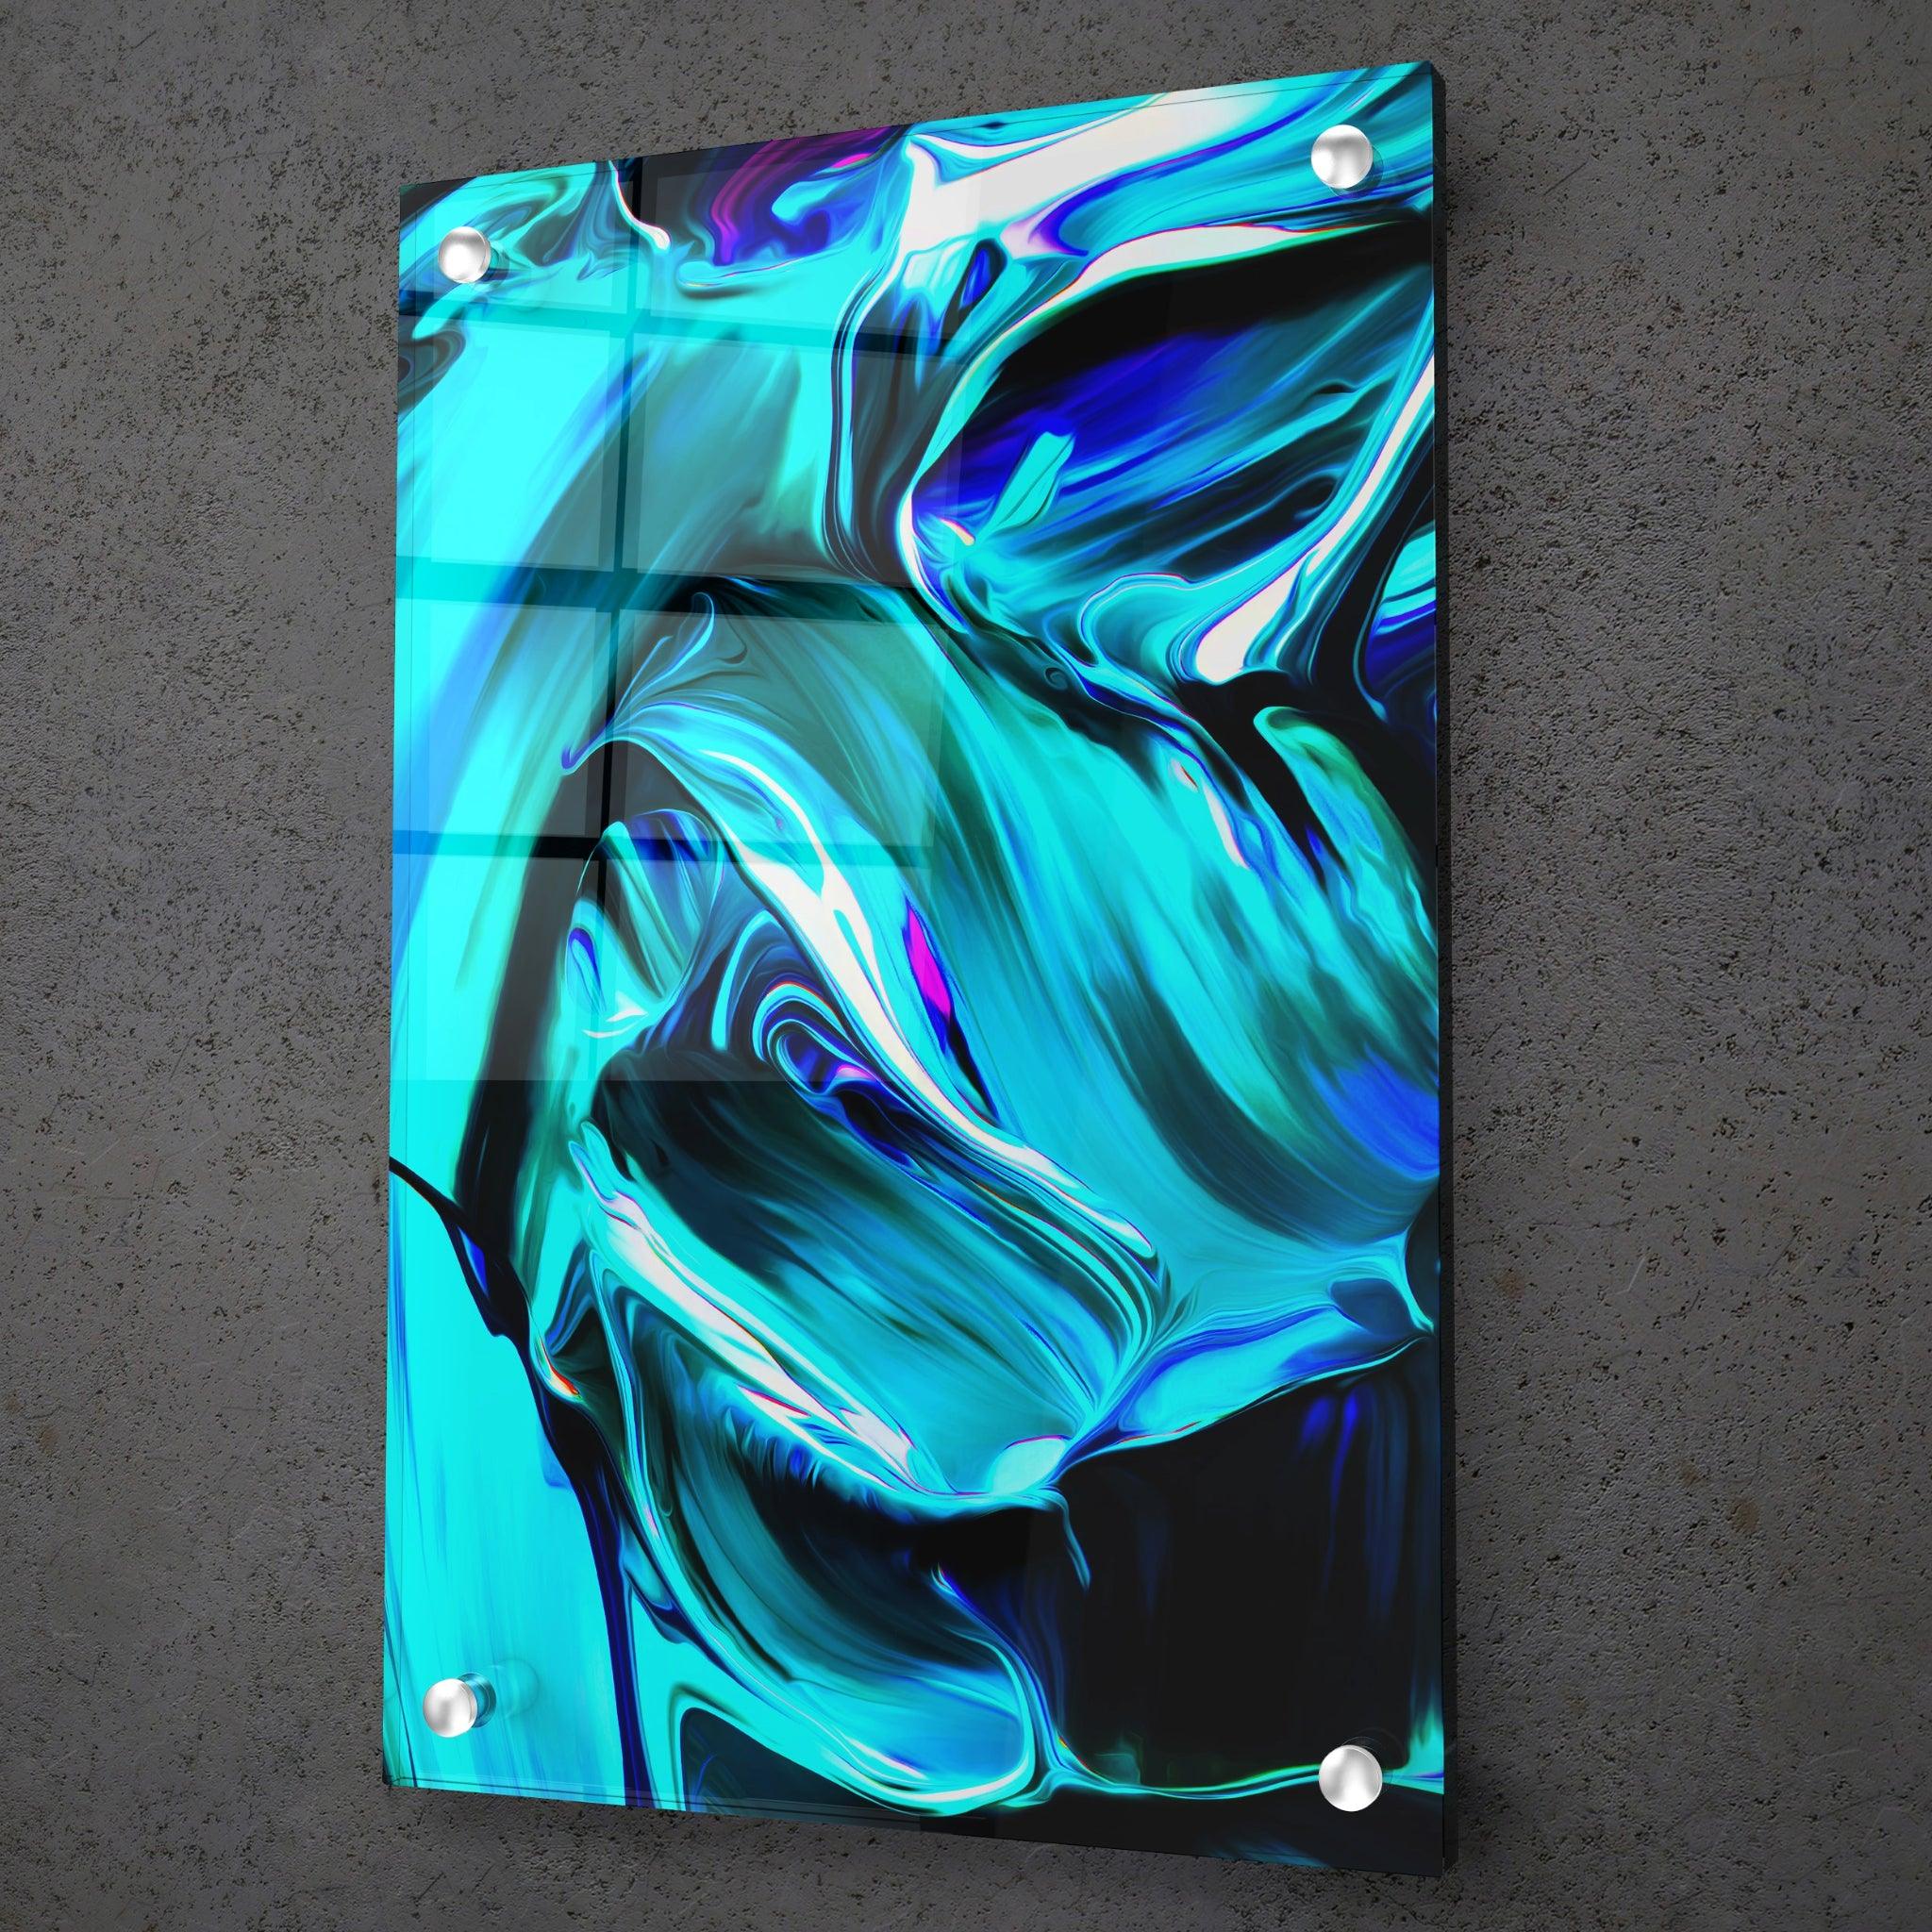 Fluid Movements: Expressive Blue Acrylic Glass Wall Art - Wallfix